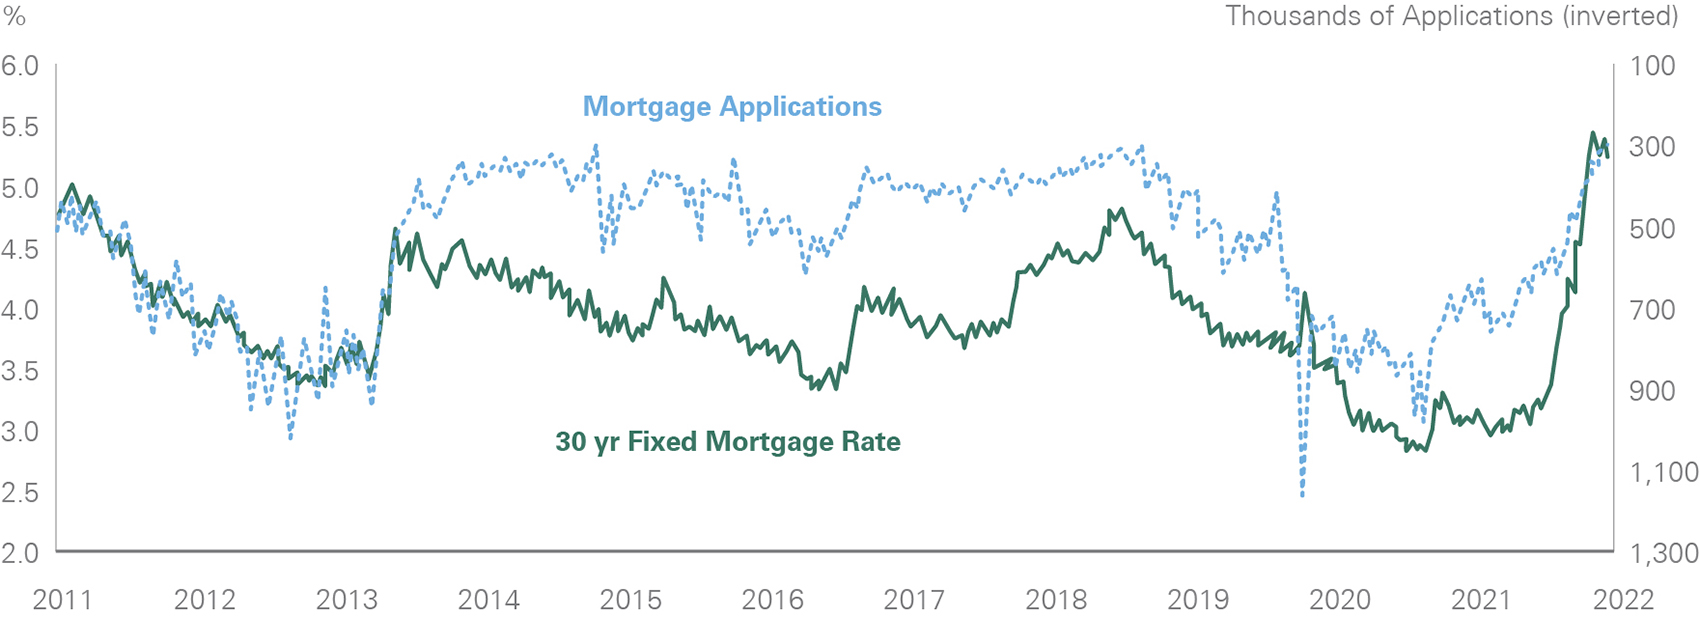 Rising mortgage rates slow mortgage applications.